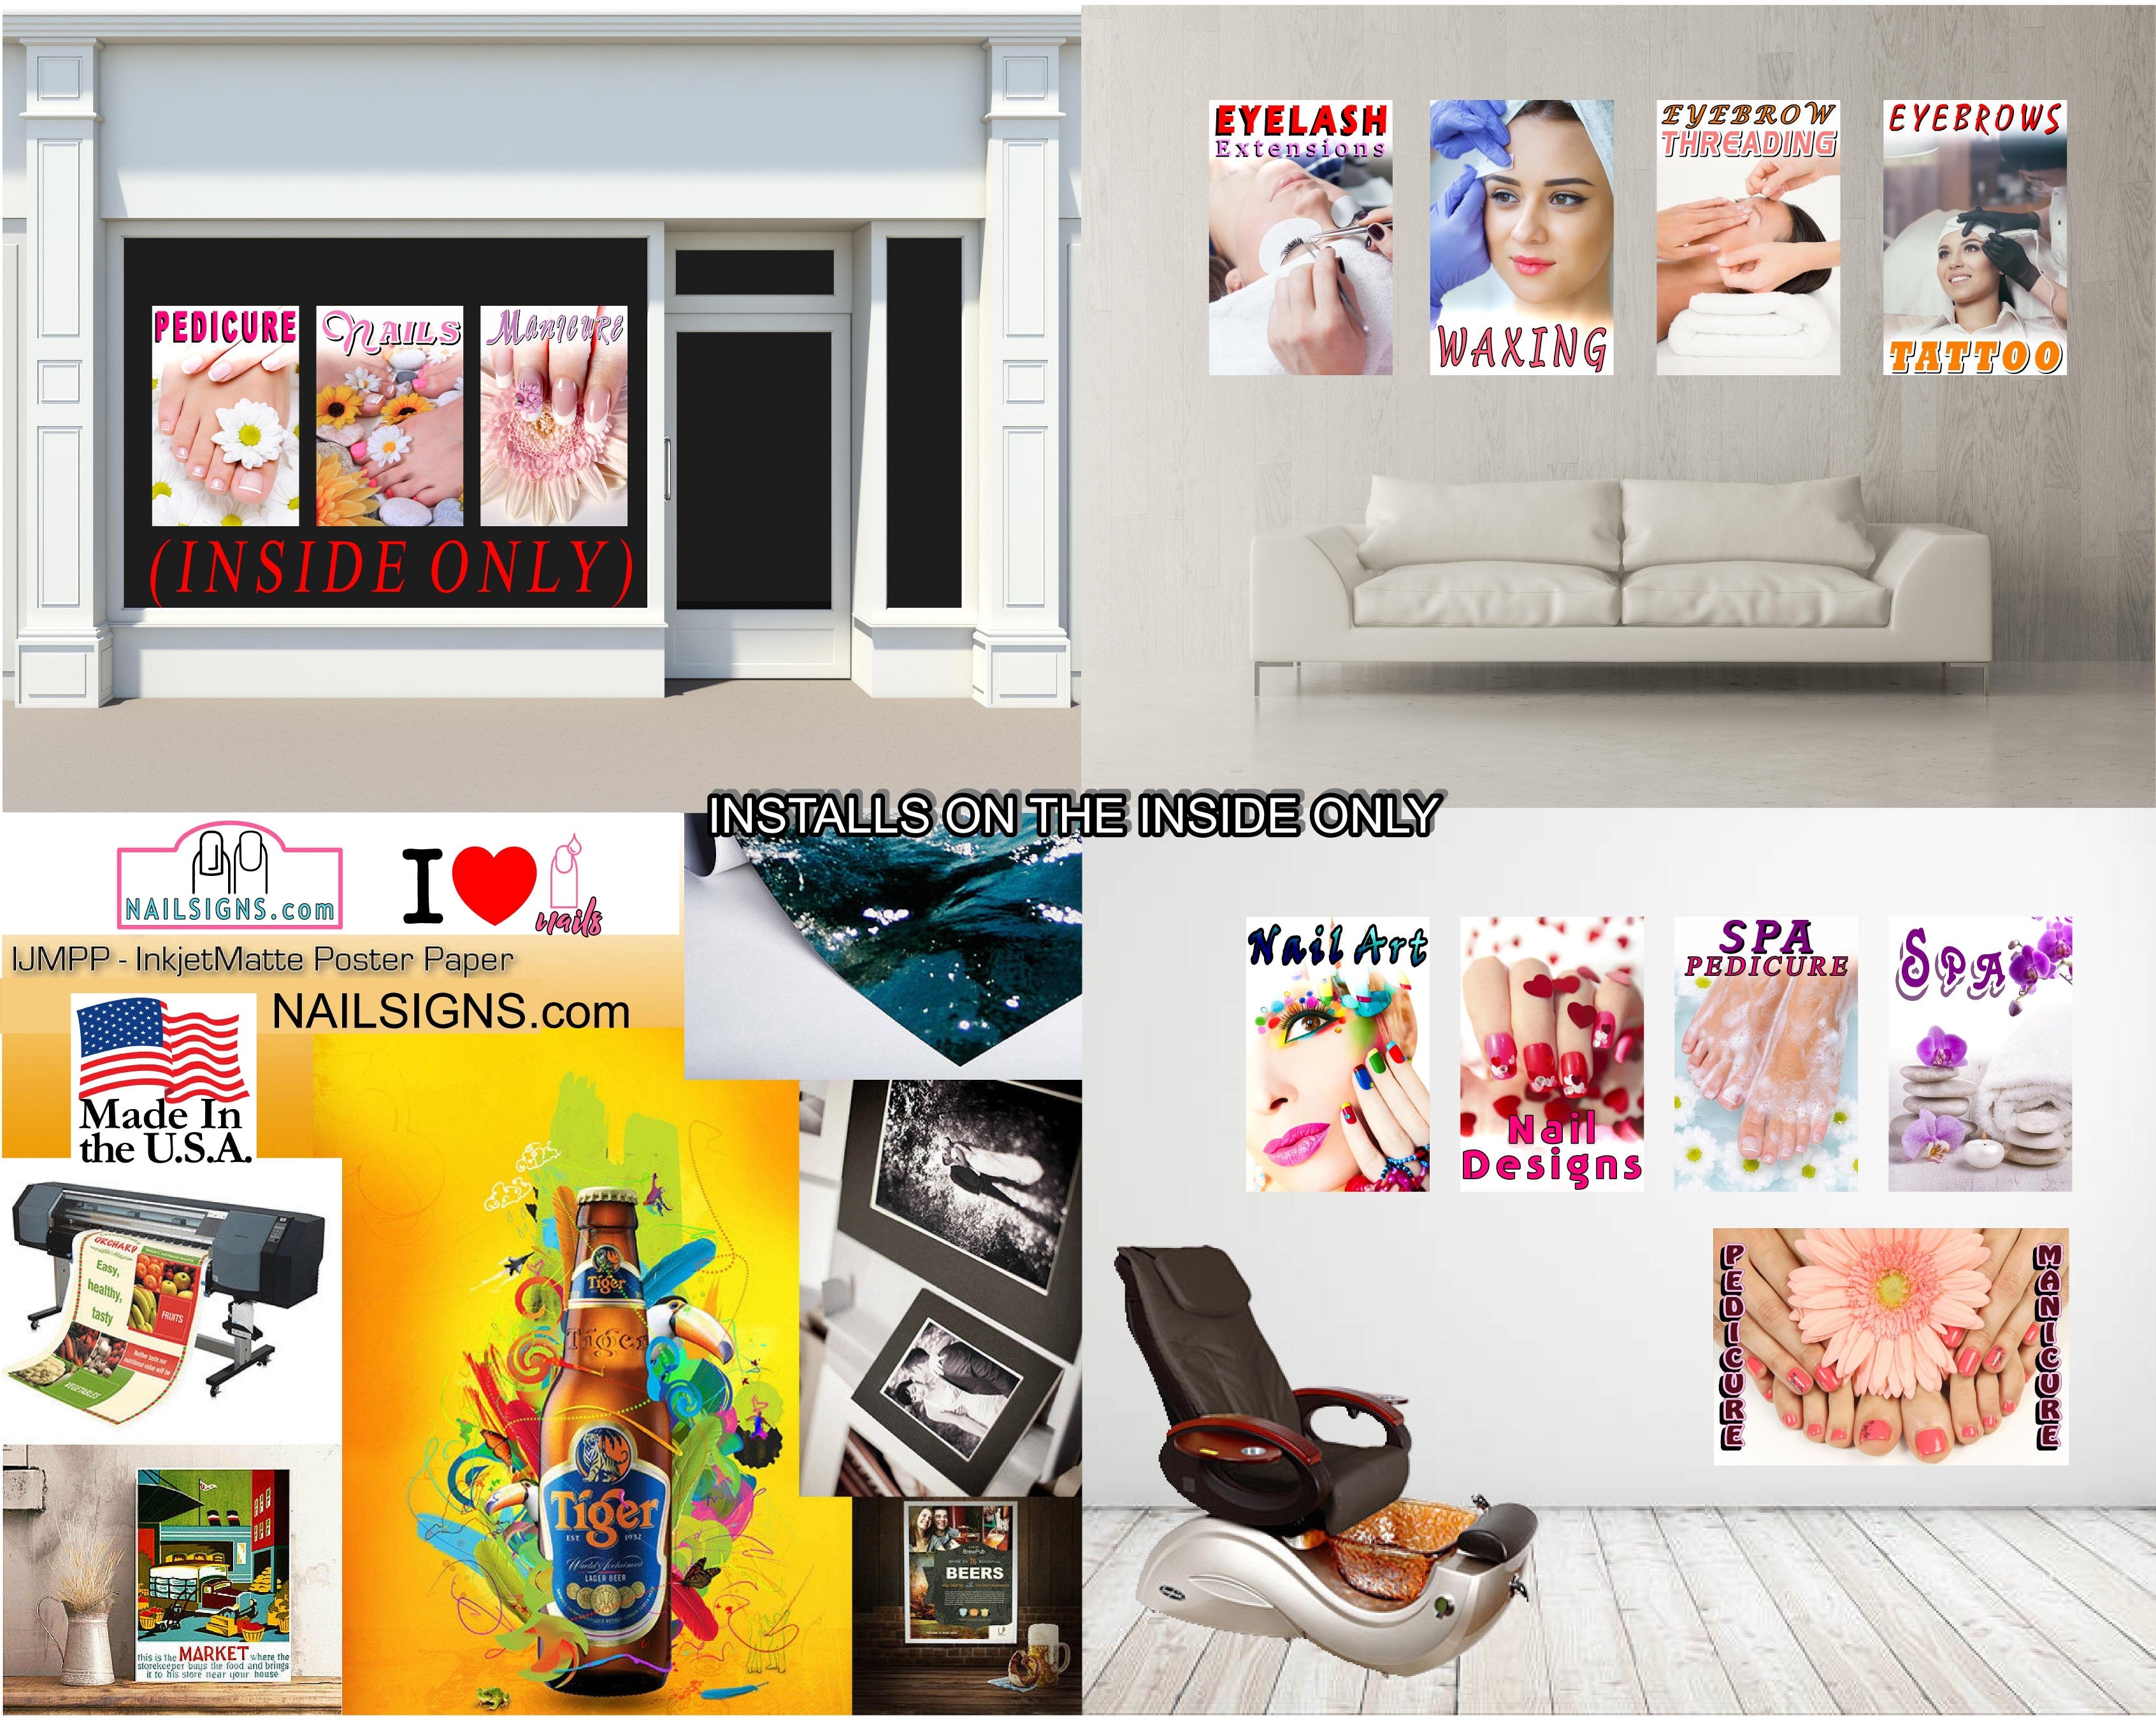 Pedicure 25 Photo-Realistic Paper Poster Premium Matte Interior Inside Sign Advertising Marketing Wall Window Non-Laminated Vertical